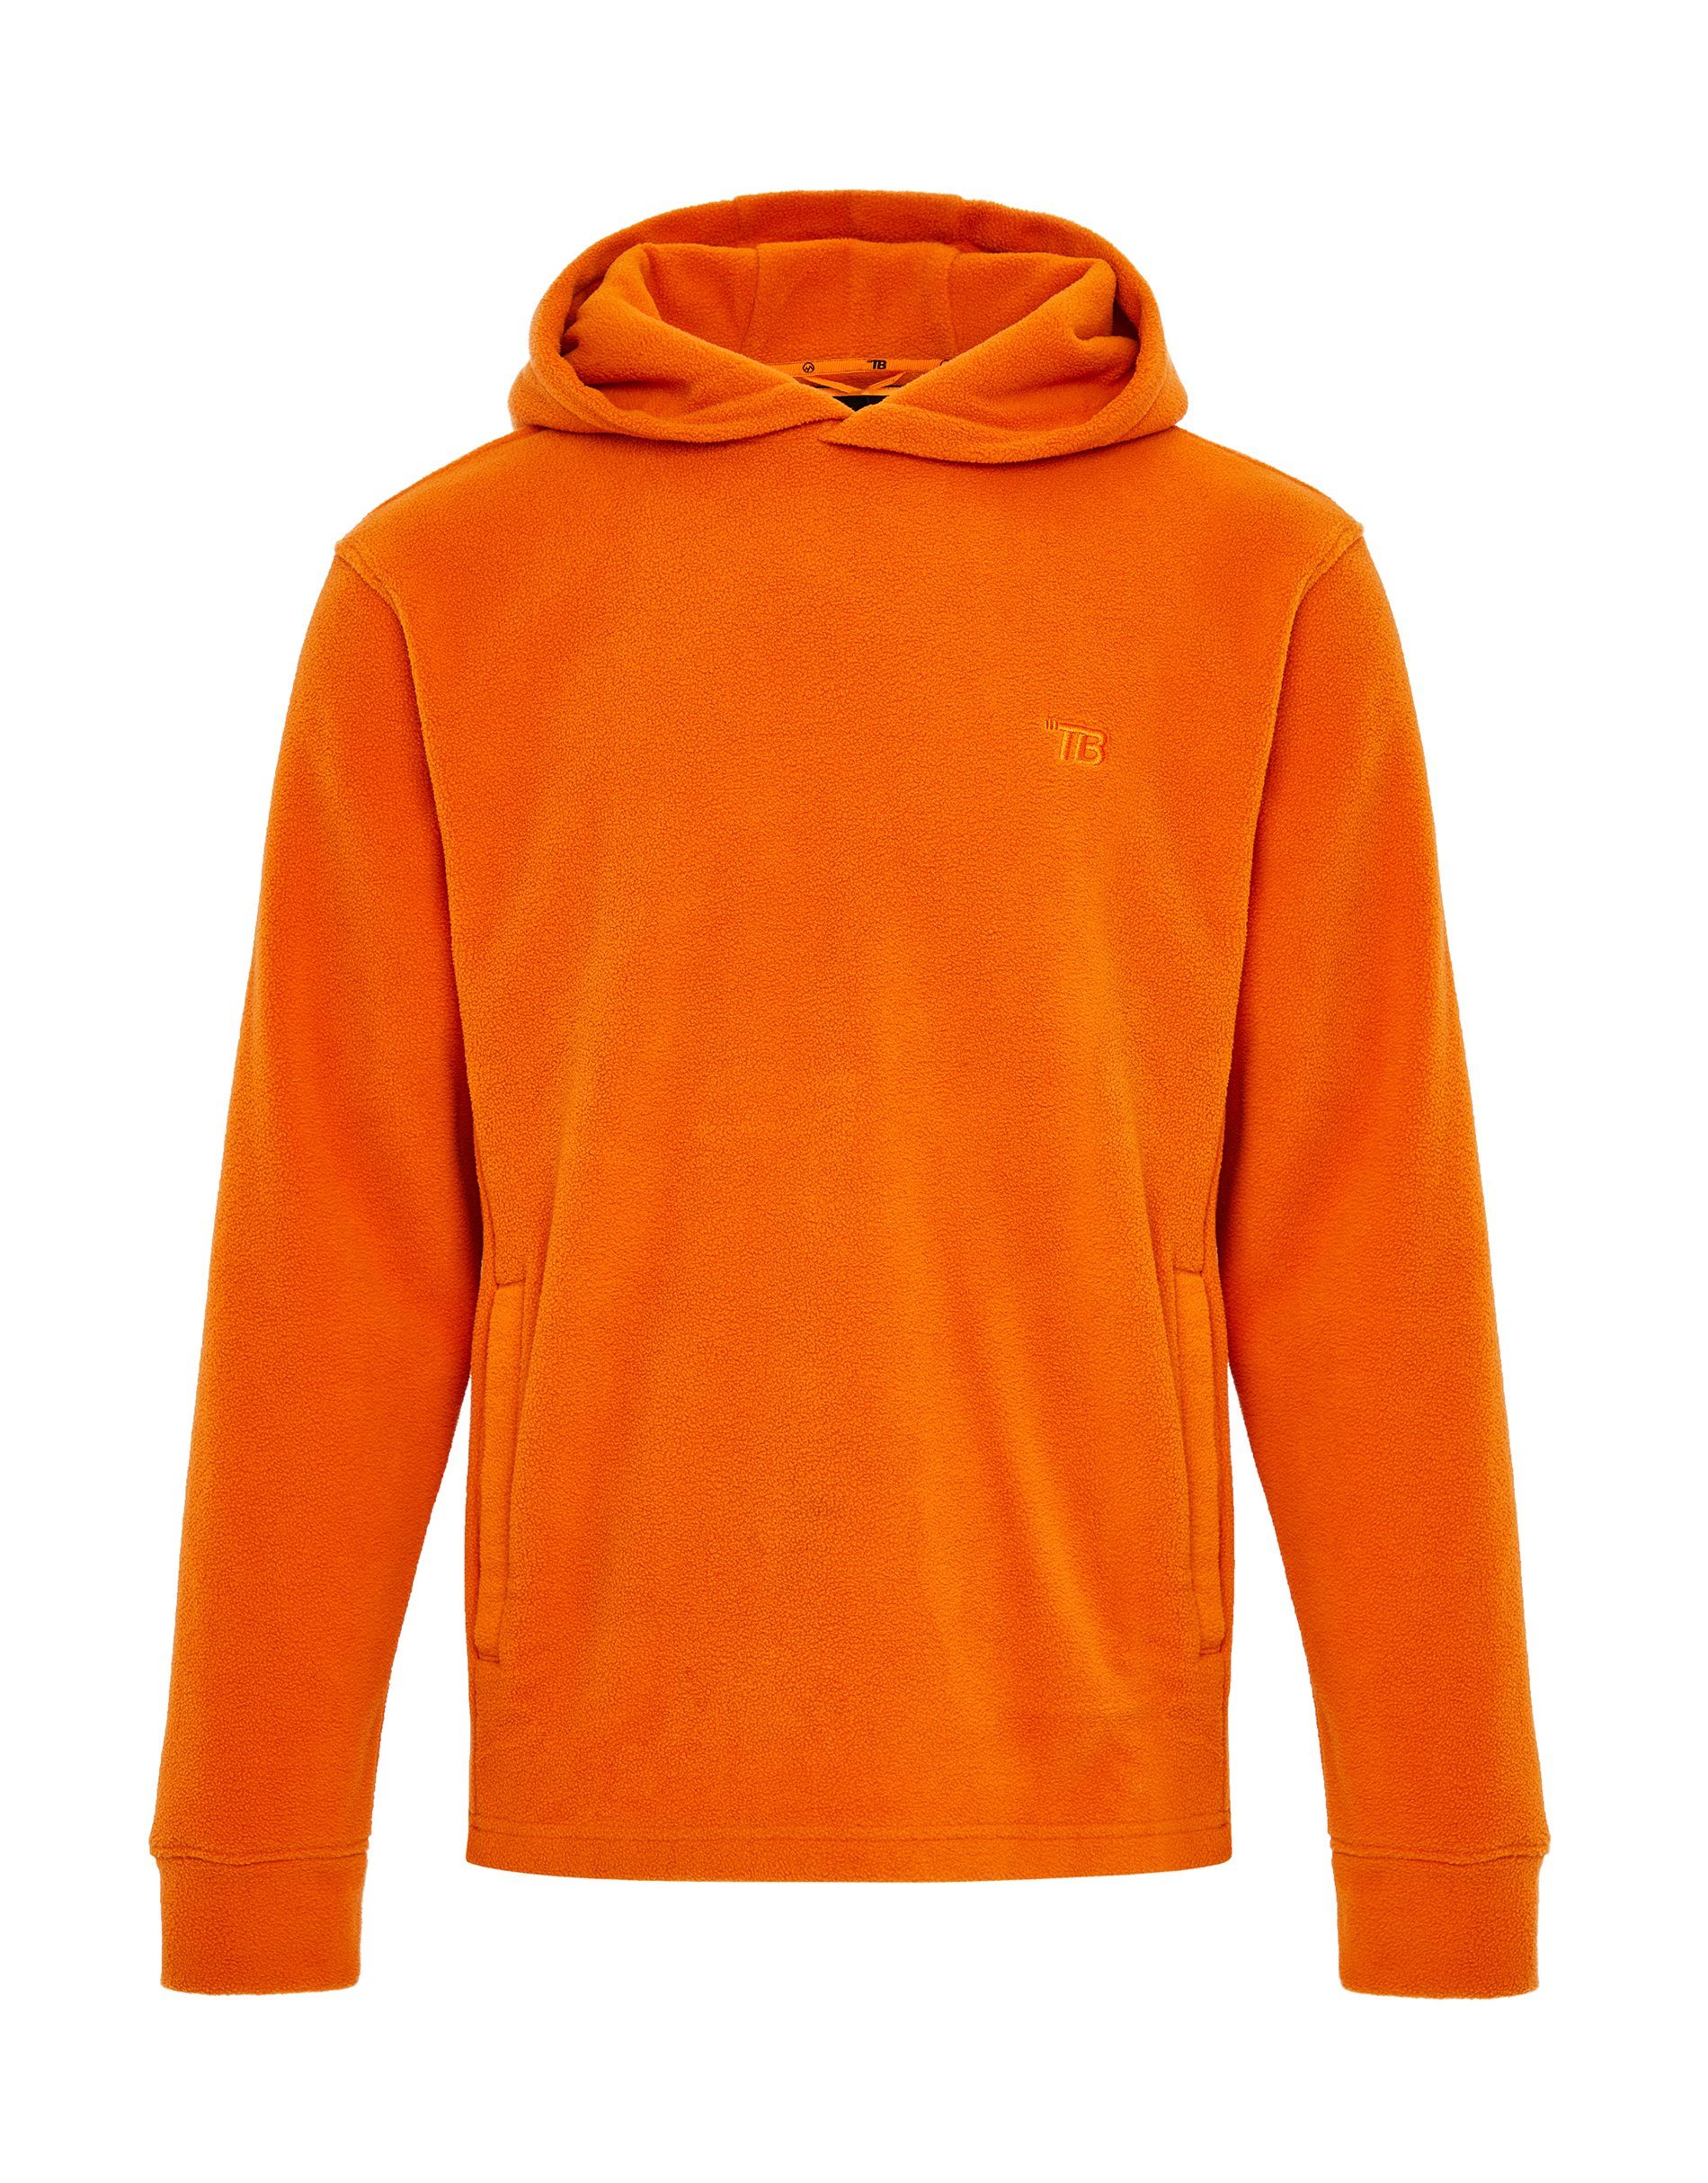 Hoody Fleece Ryan Hoodie Fitness Orange THB Threadbare